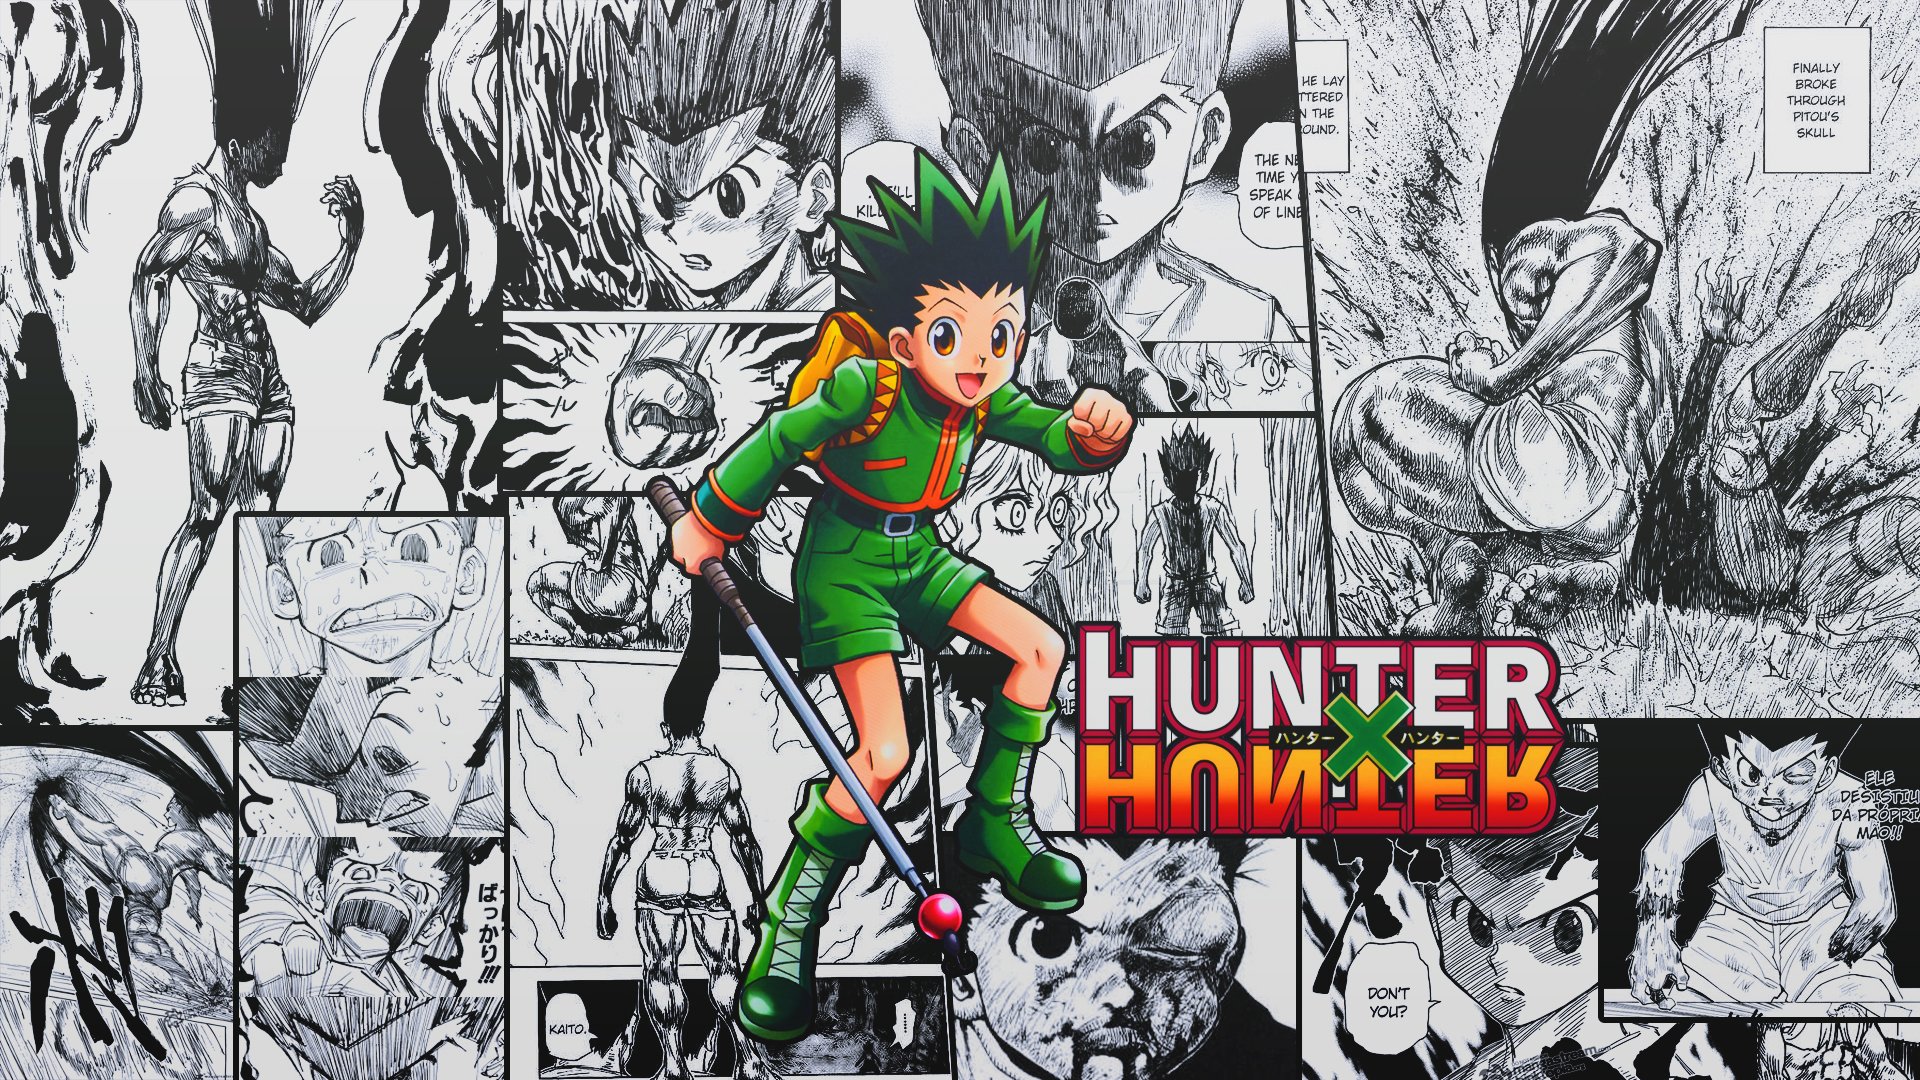 Anime wallpaper hunter x hunter 1500x1125 582363 it